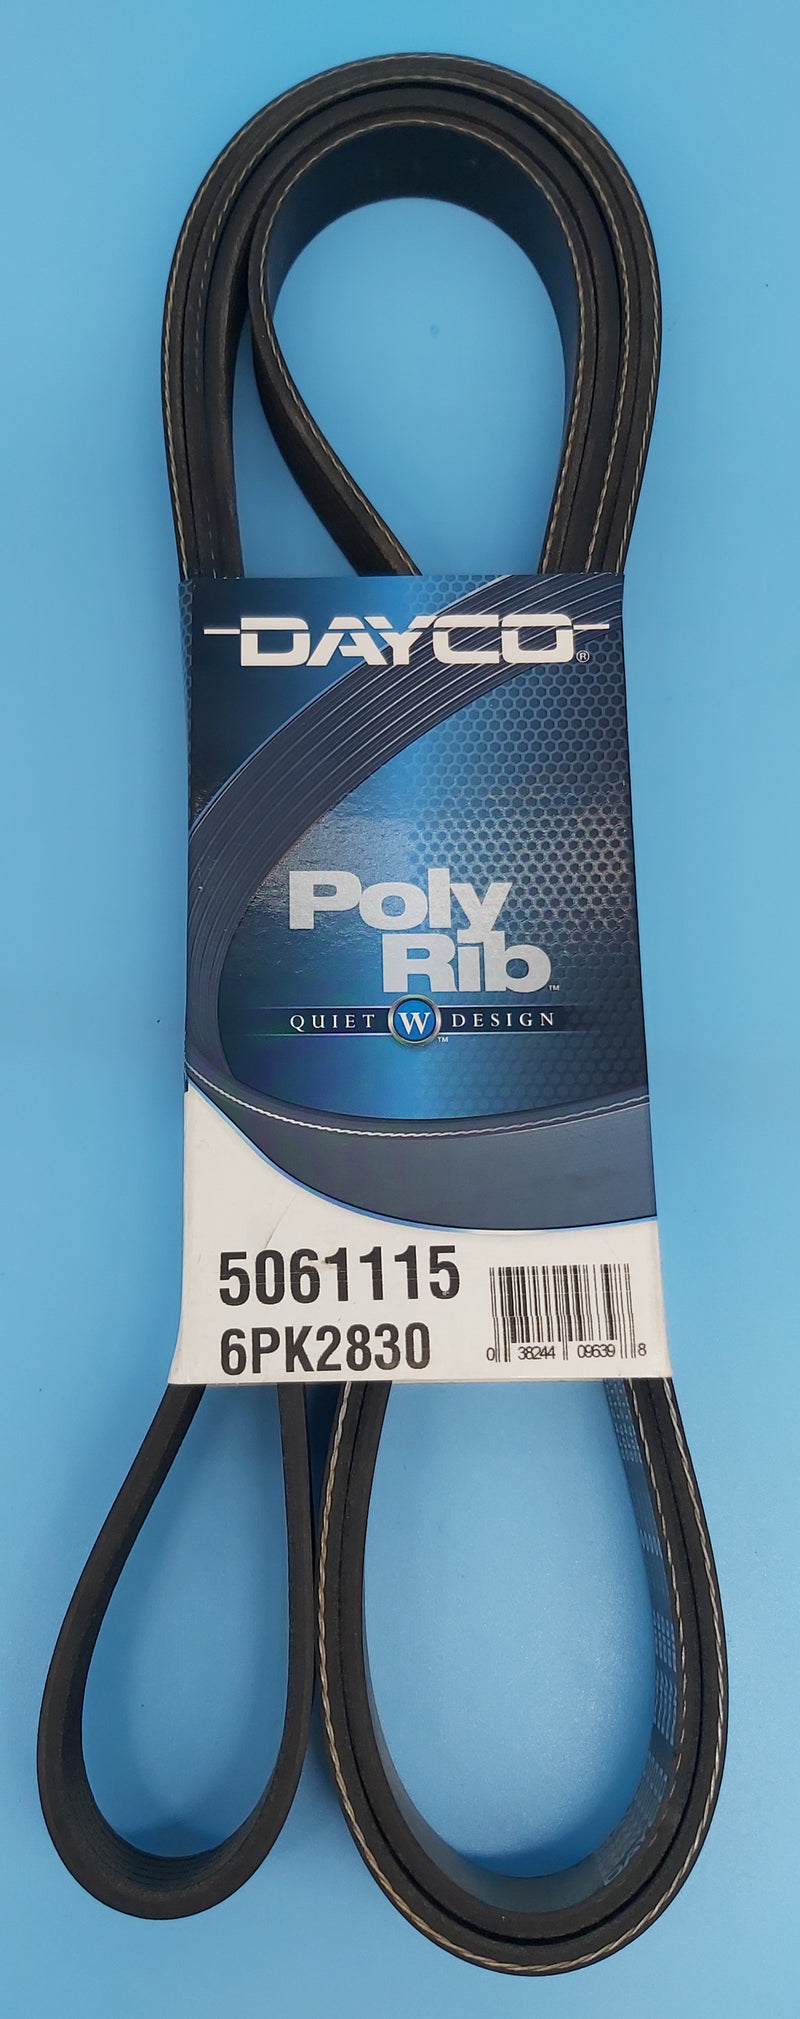 Dayco 6PK2830 Belt, Dayco 5061115 Serpentine Belt